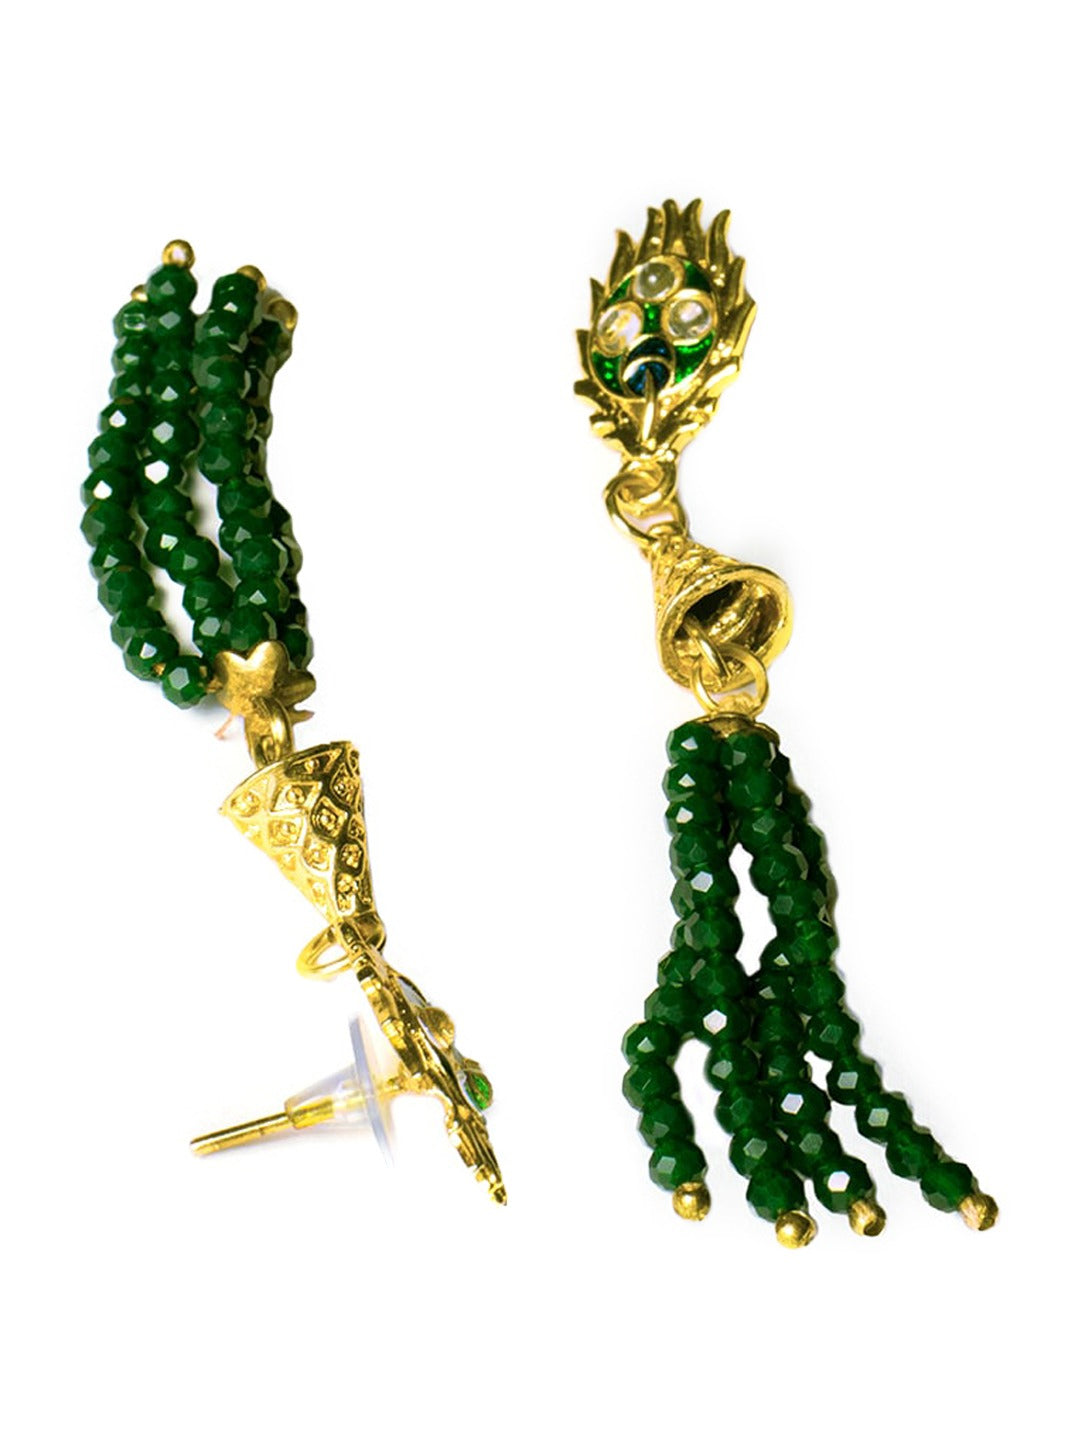 Women's Gold-Plated Green & White Kundan Stone-Studded Jewellery Set - Morkanth